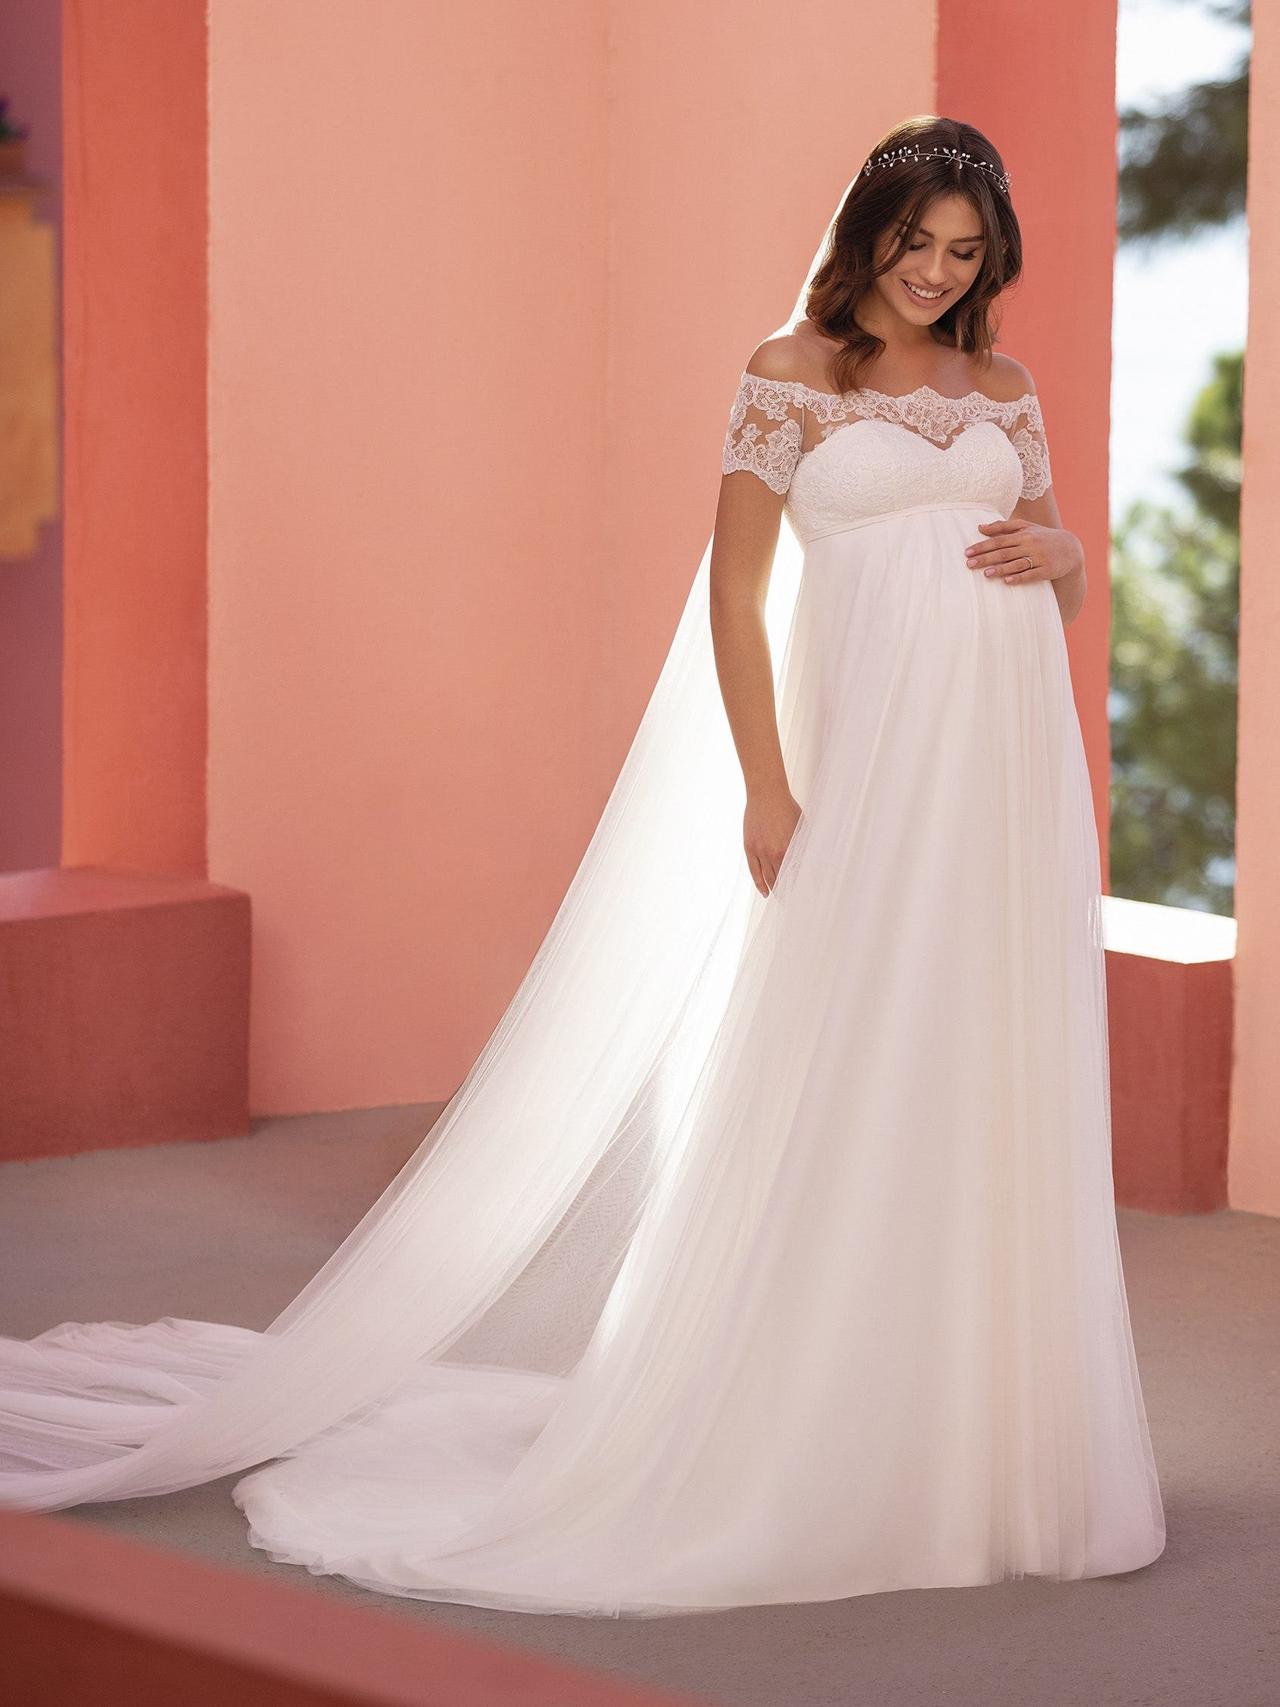 Vestidos de novia para embarazadas: lo que debes buscar - bodas.com.mx